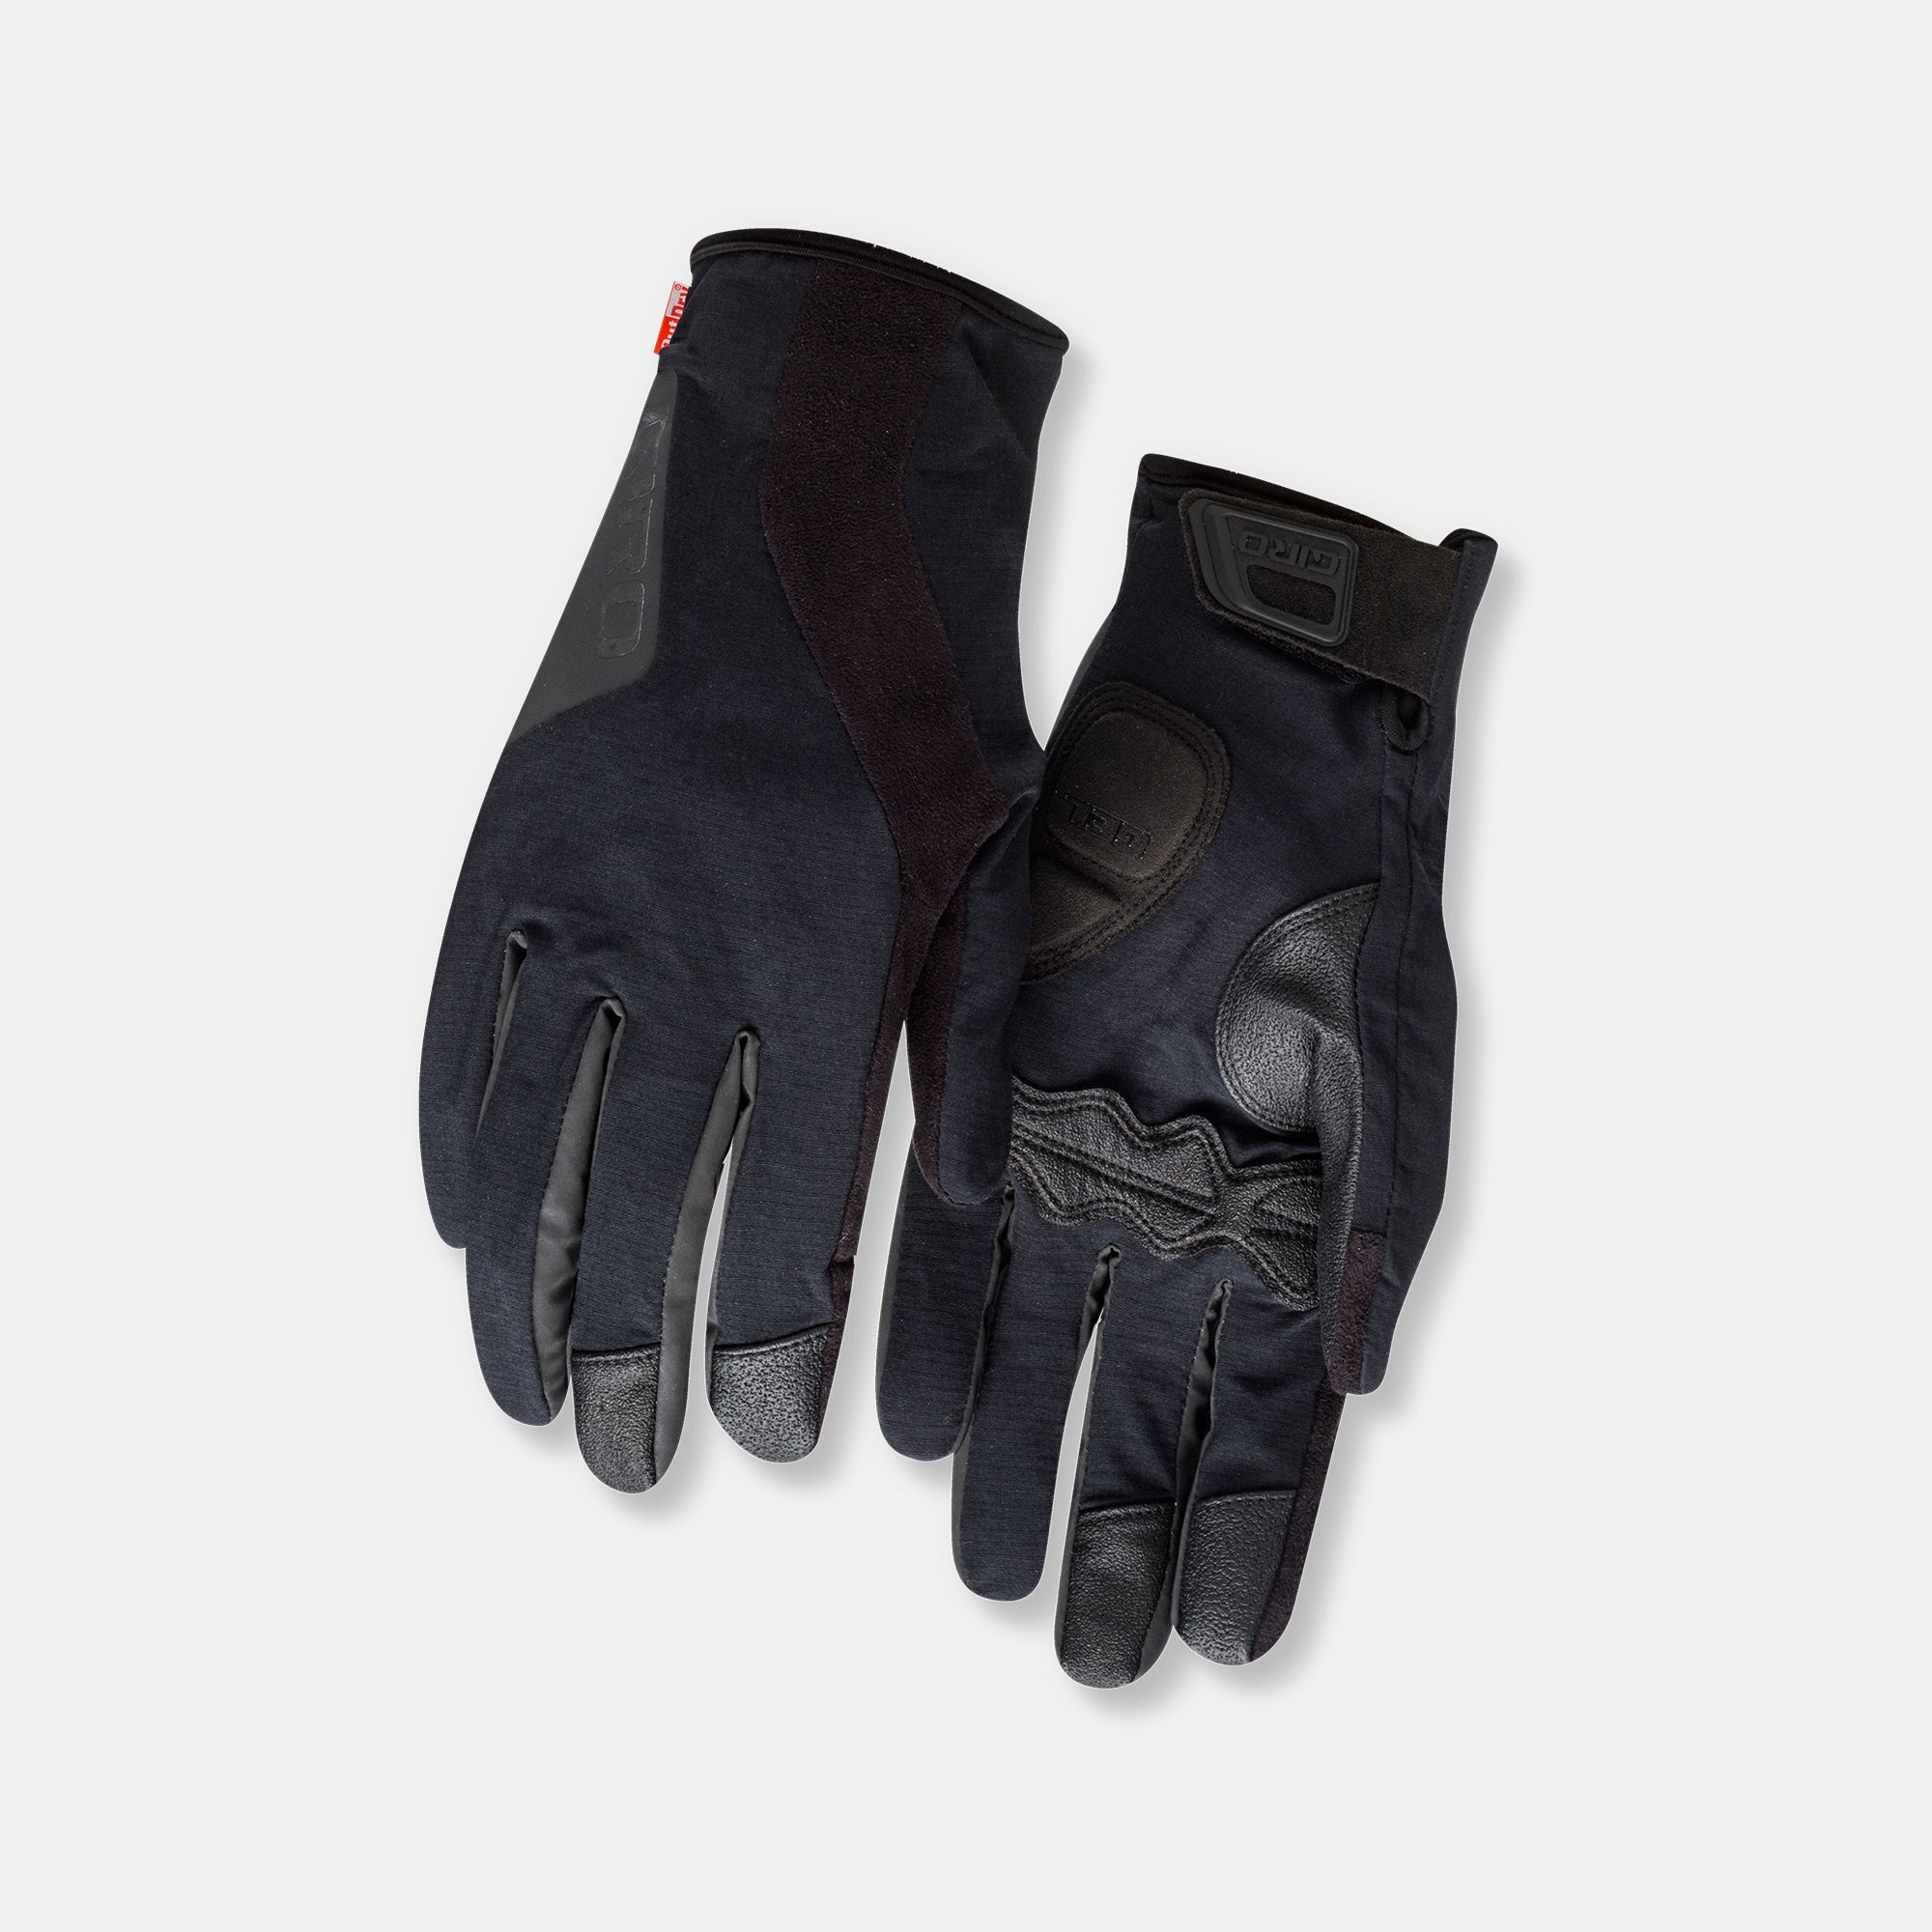 X-large Giro Proof Winter Gloves Black 